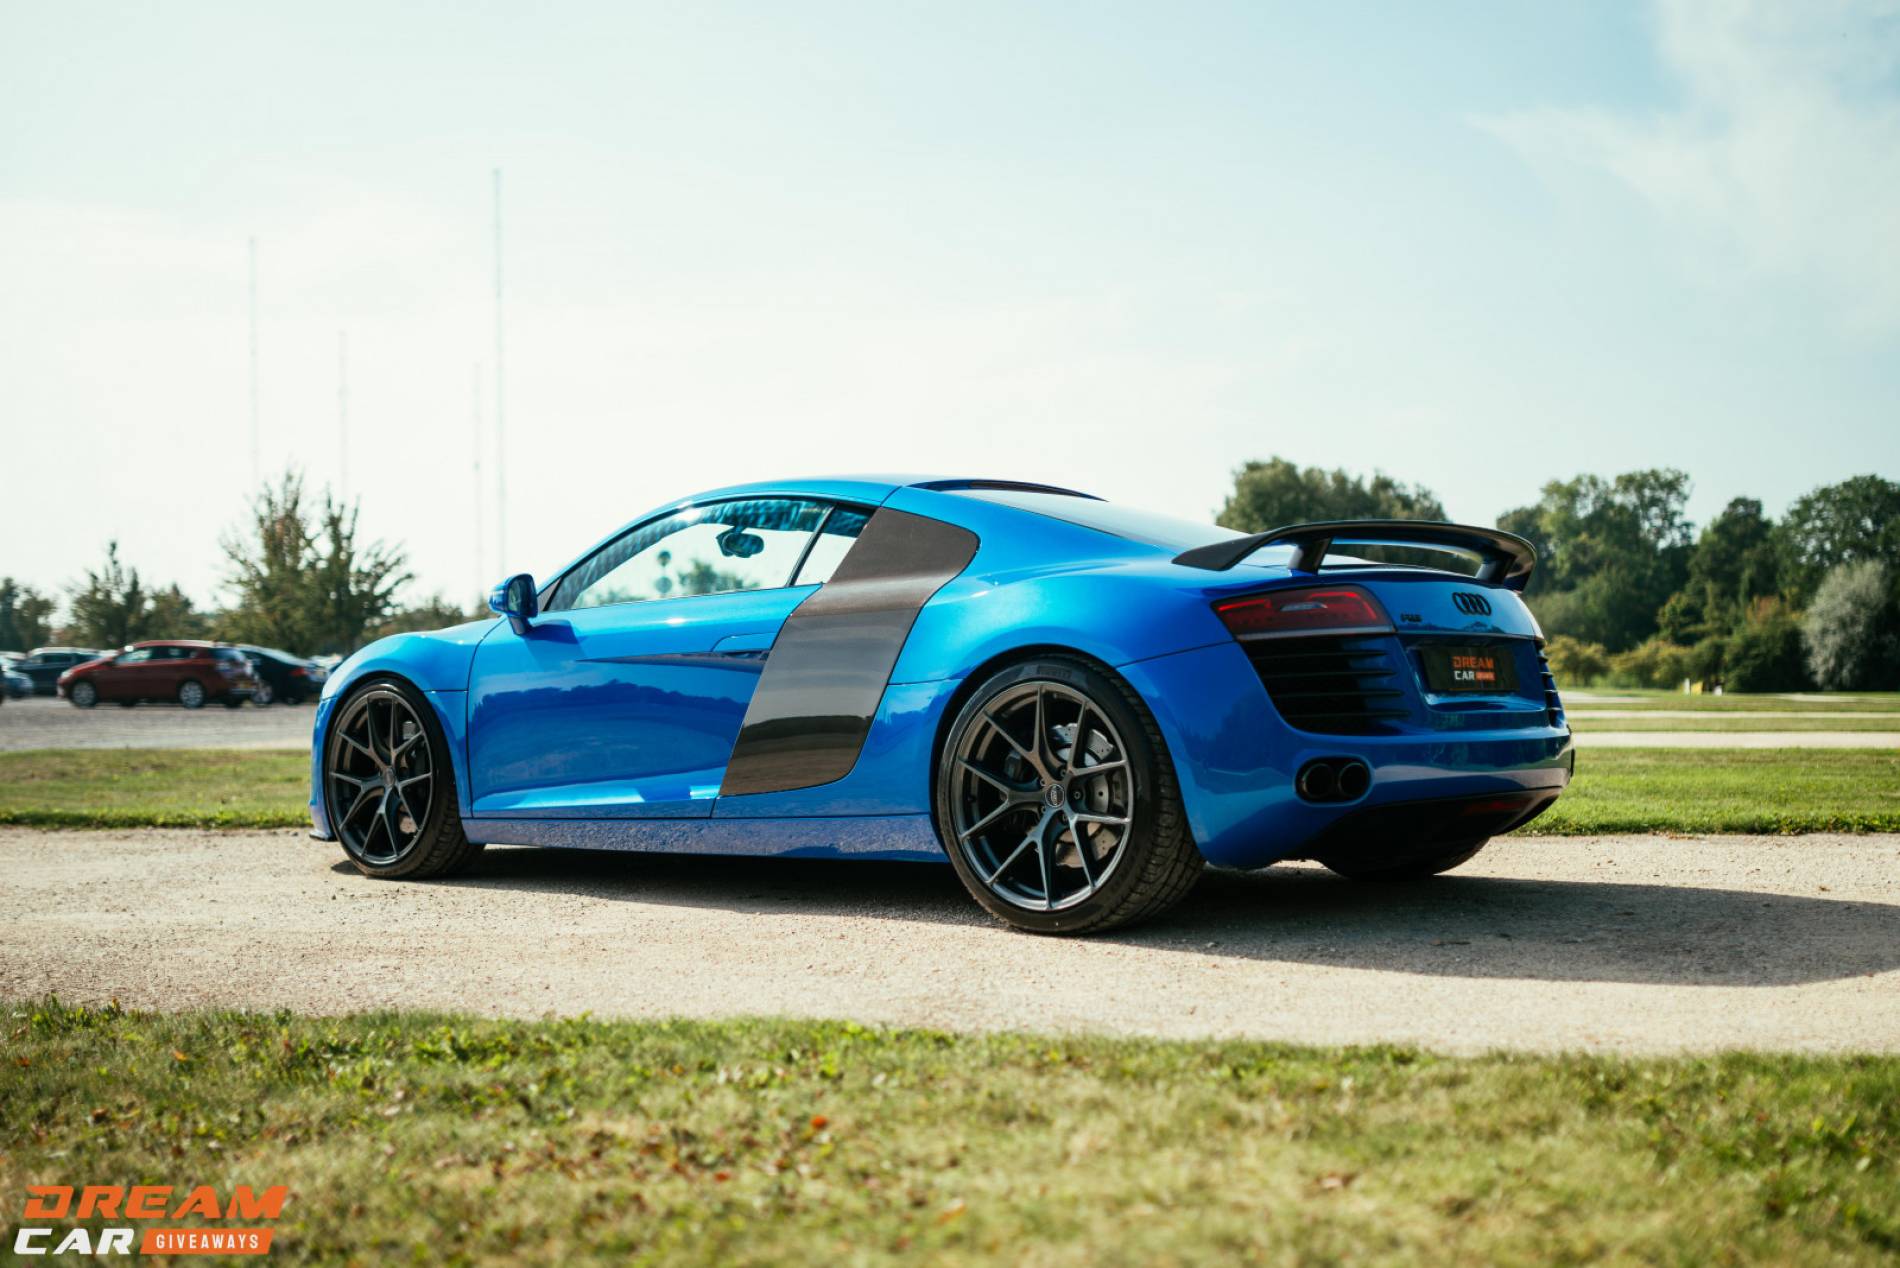 Sprint Blue Audi R8 &amp; £2000 or £30,000 Tax Free